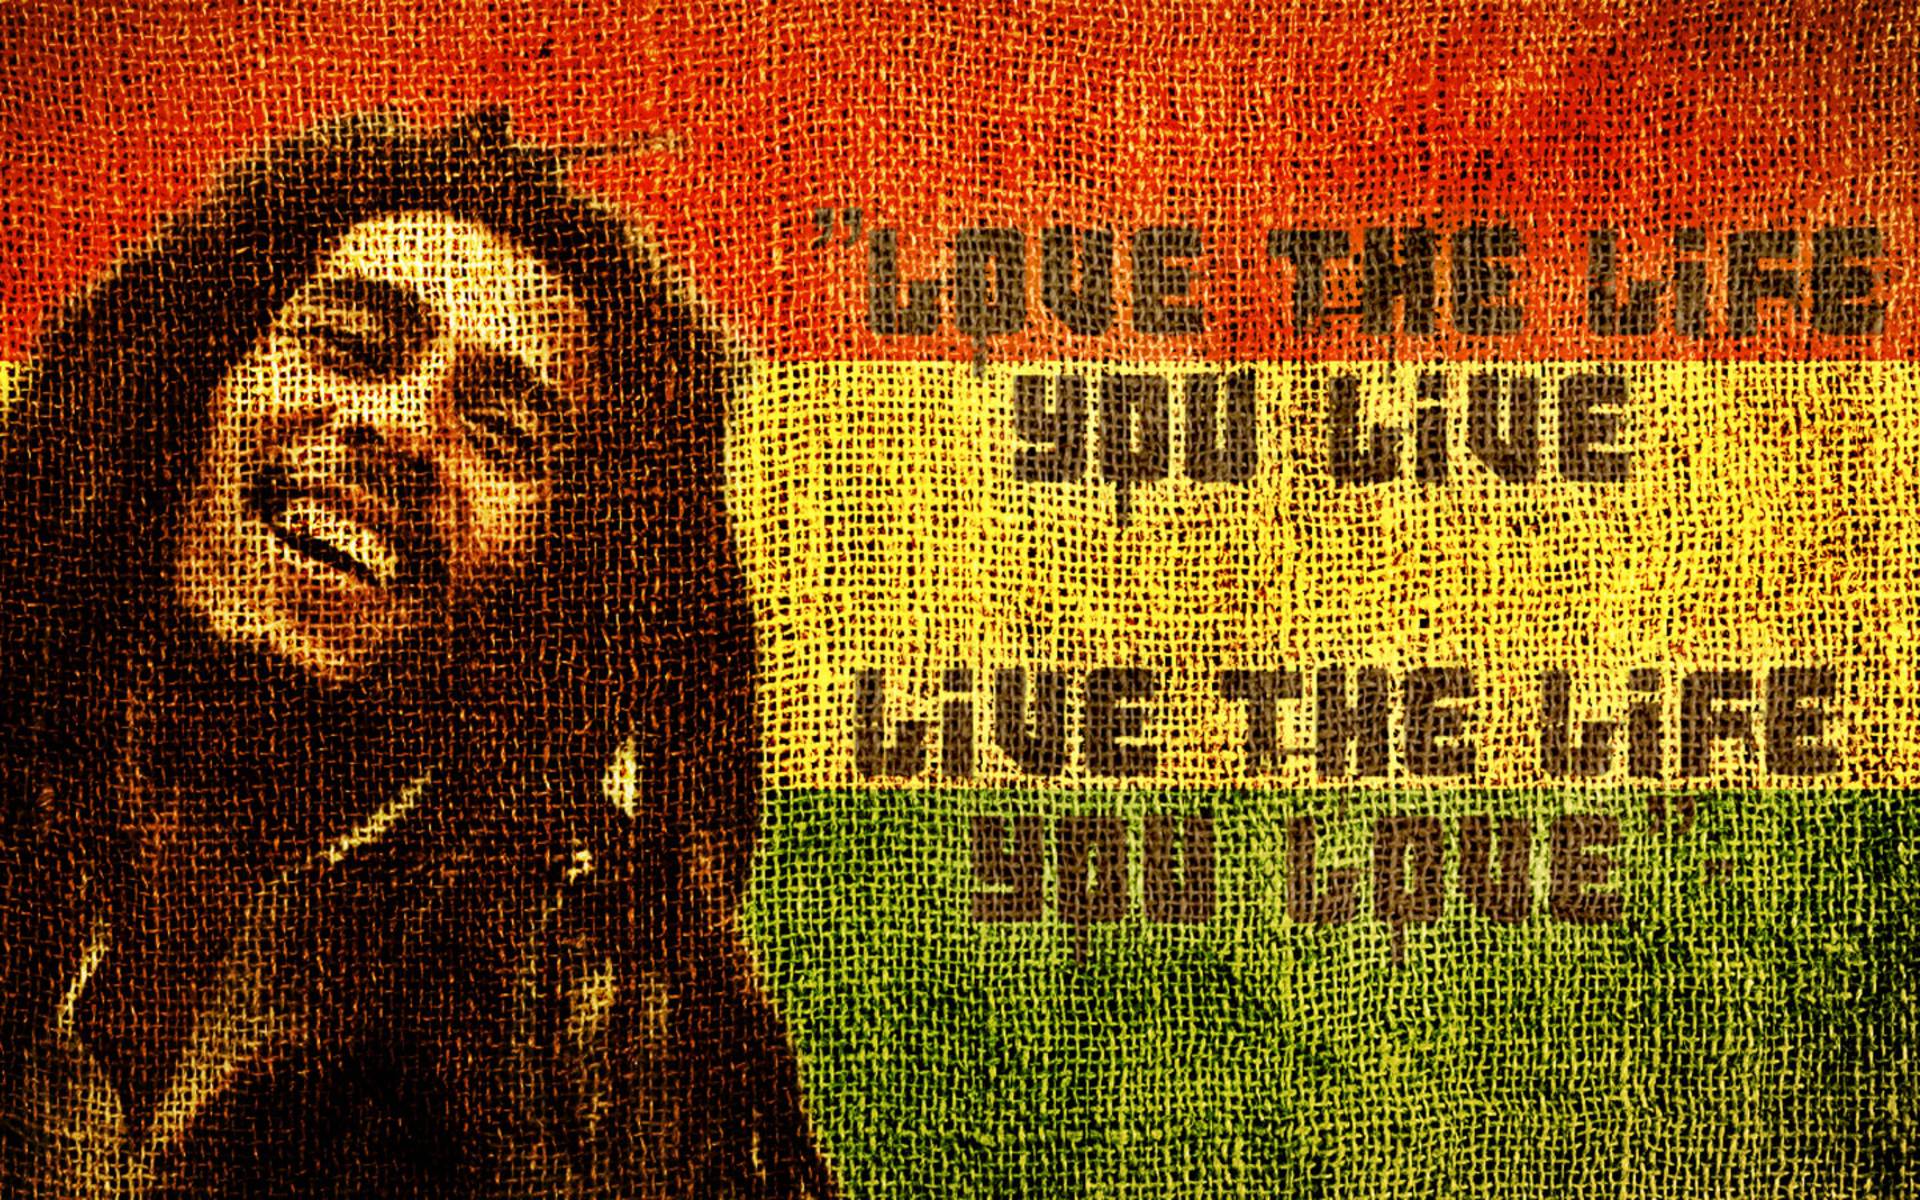 Bob Marley Desktop Backgrounds - Wallpaper Cave